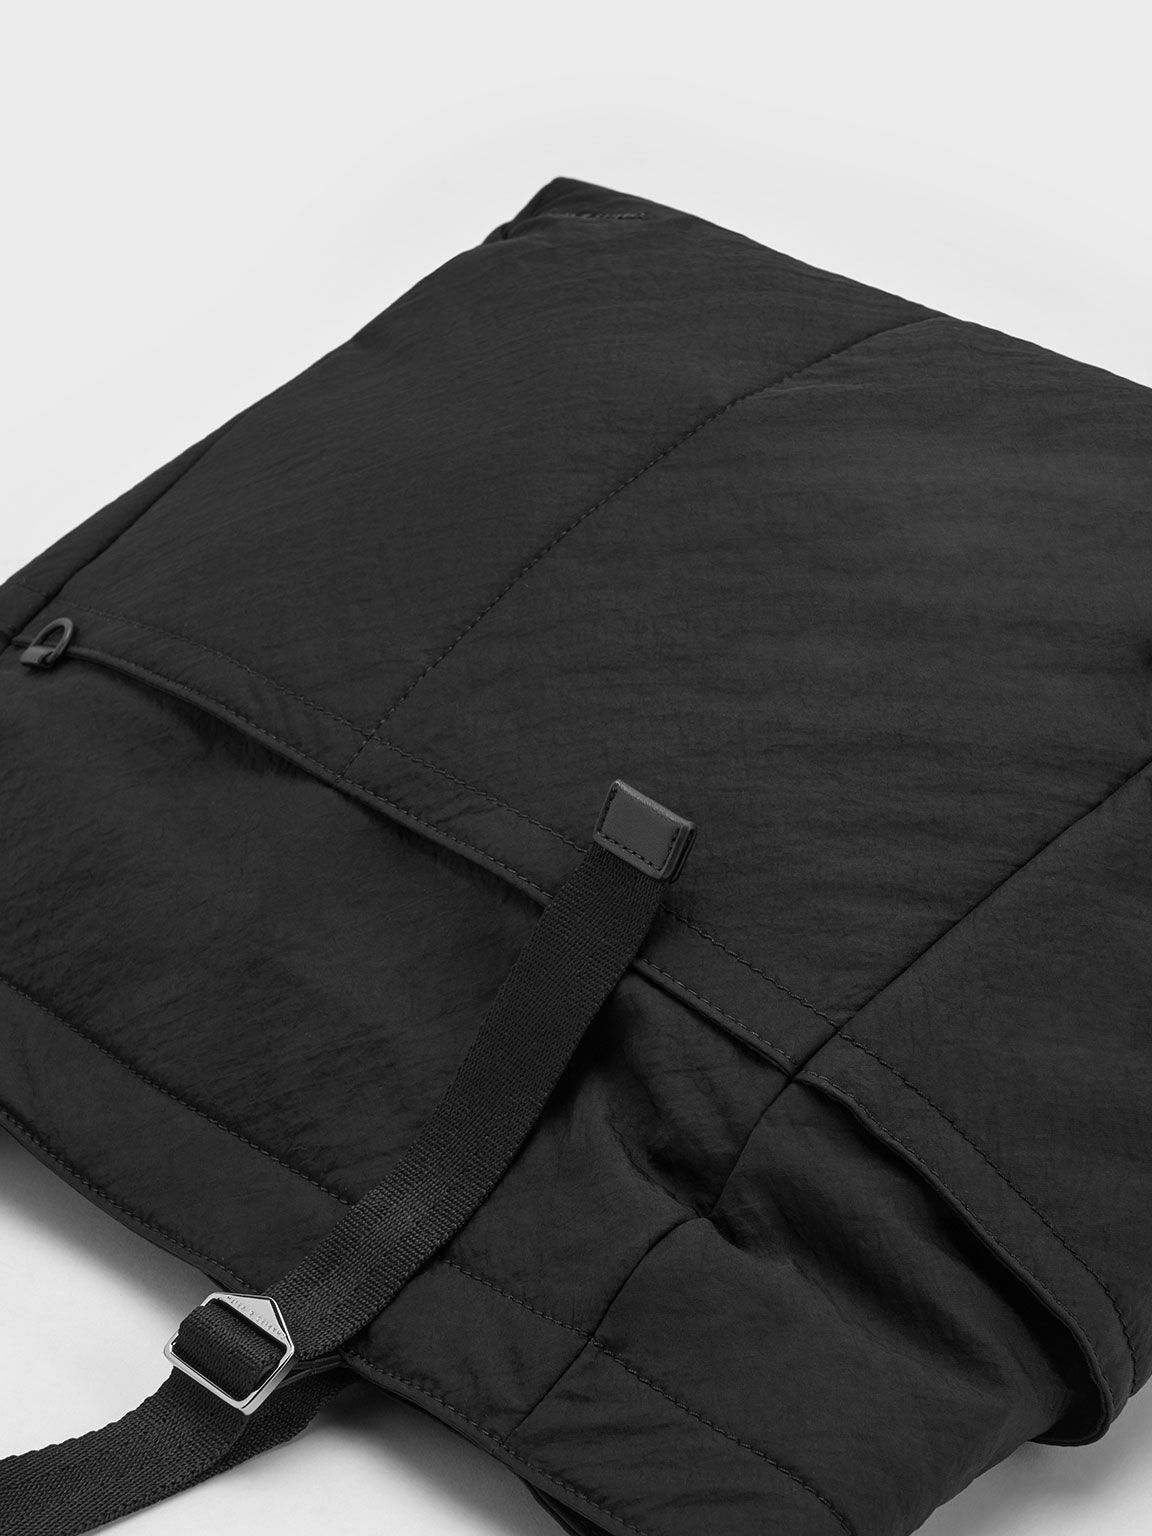 Soleil Nylon Tote Bag, สีดำอะไหล่สีเงิน, hi-res